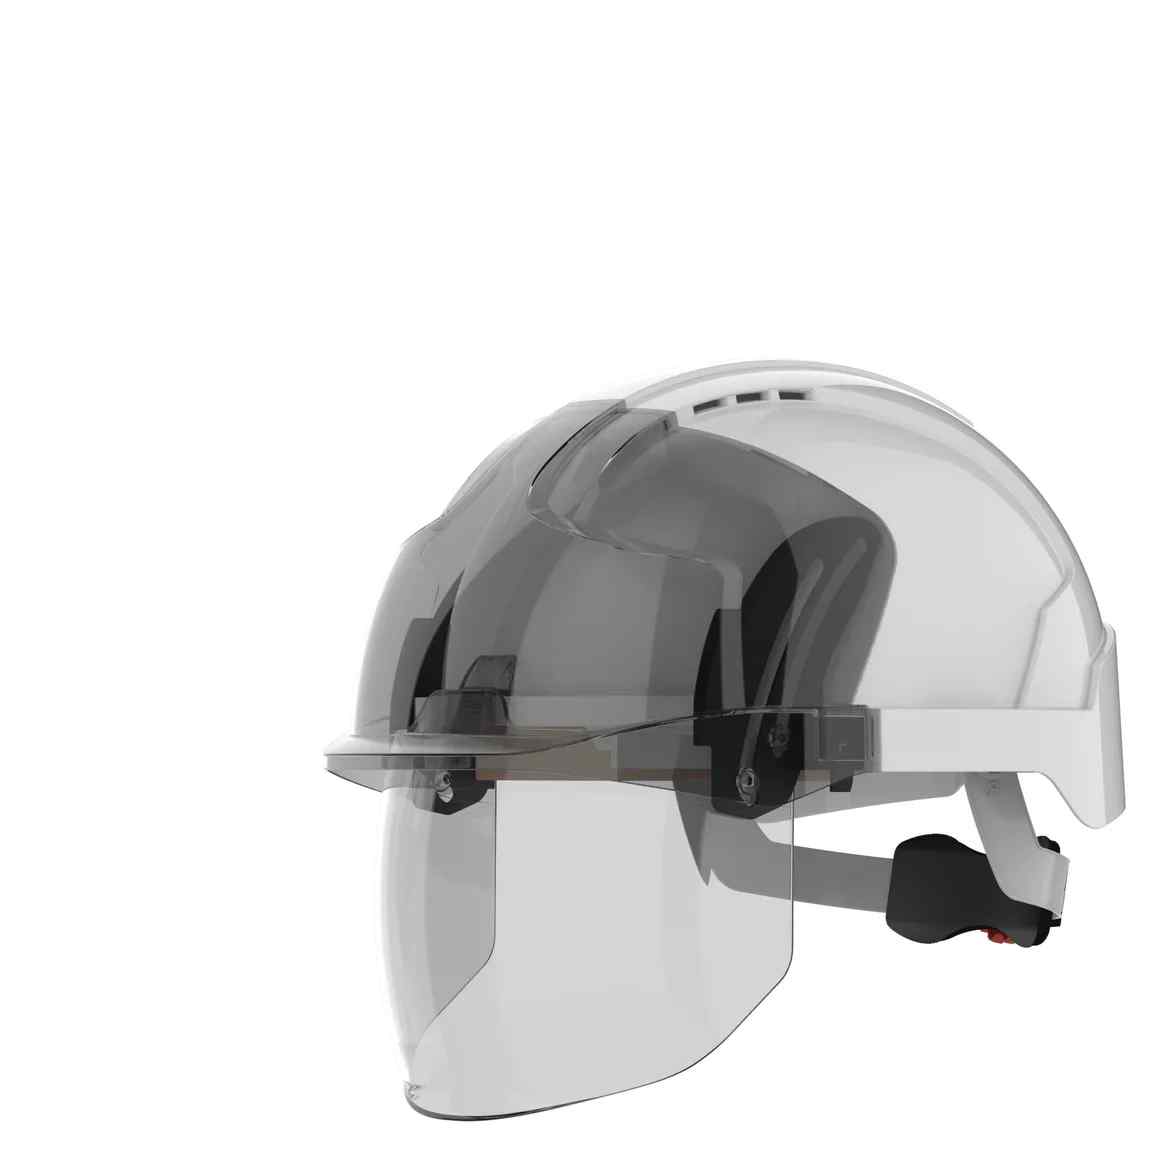 Head protection | Safety Helmets - Climbing Helmets - Bump Caps